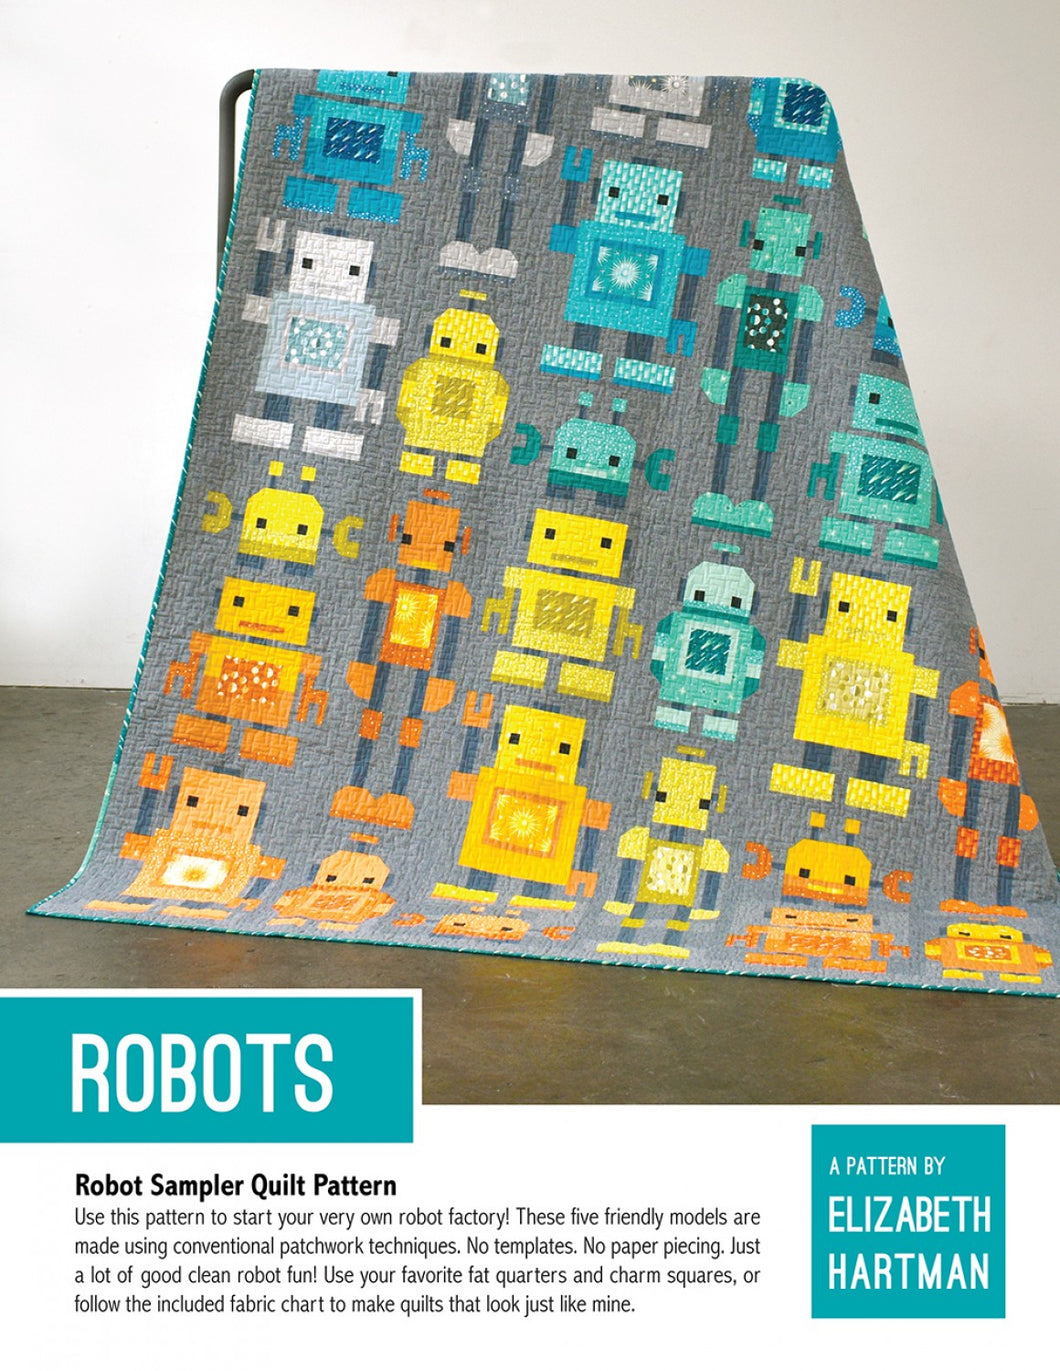 Quilt Pattern: Robots by Elizabeth Hartman